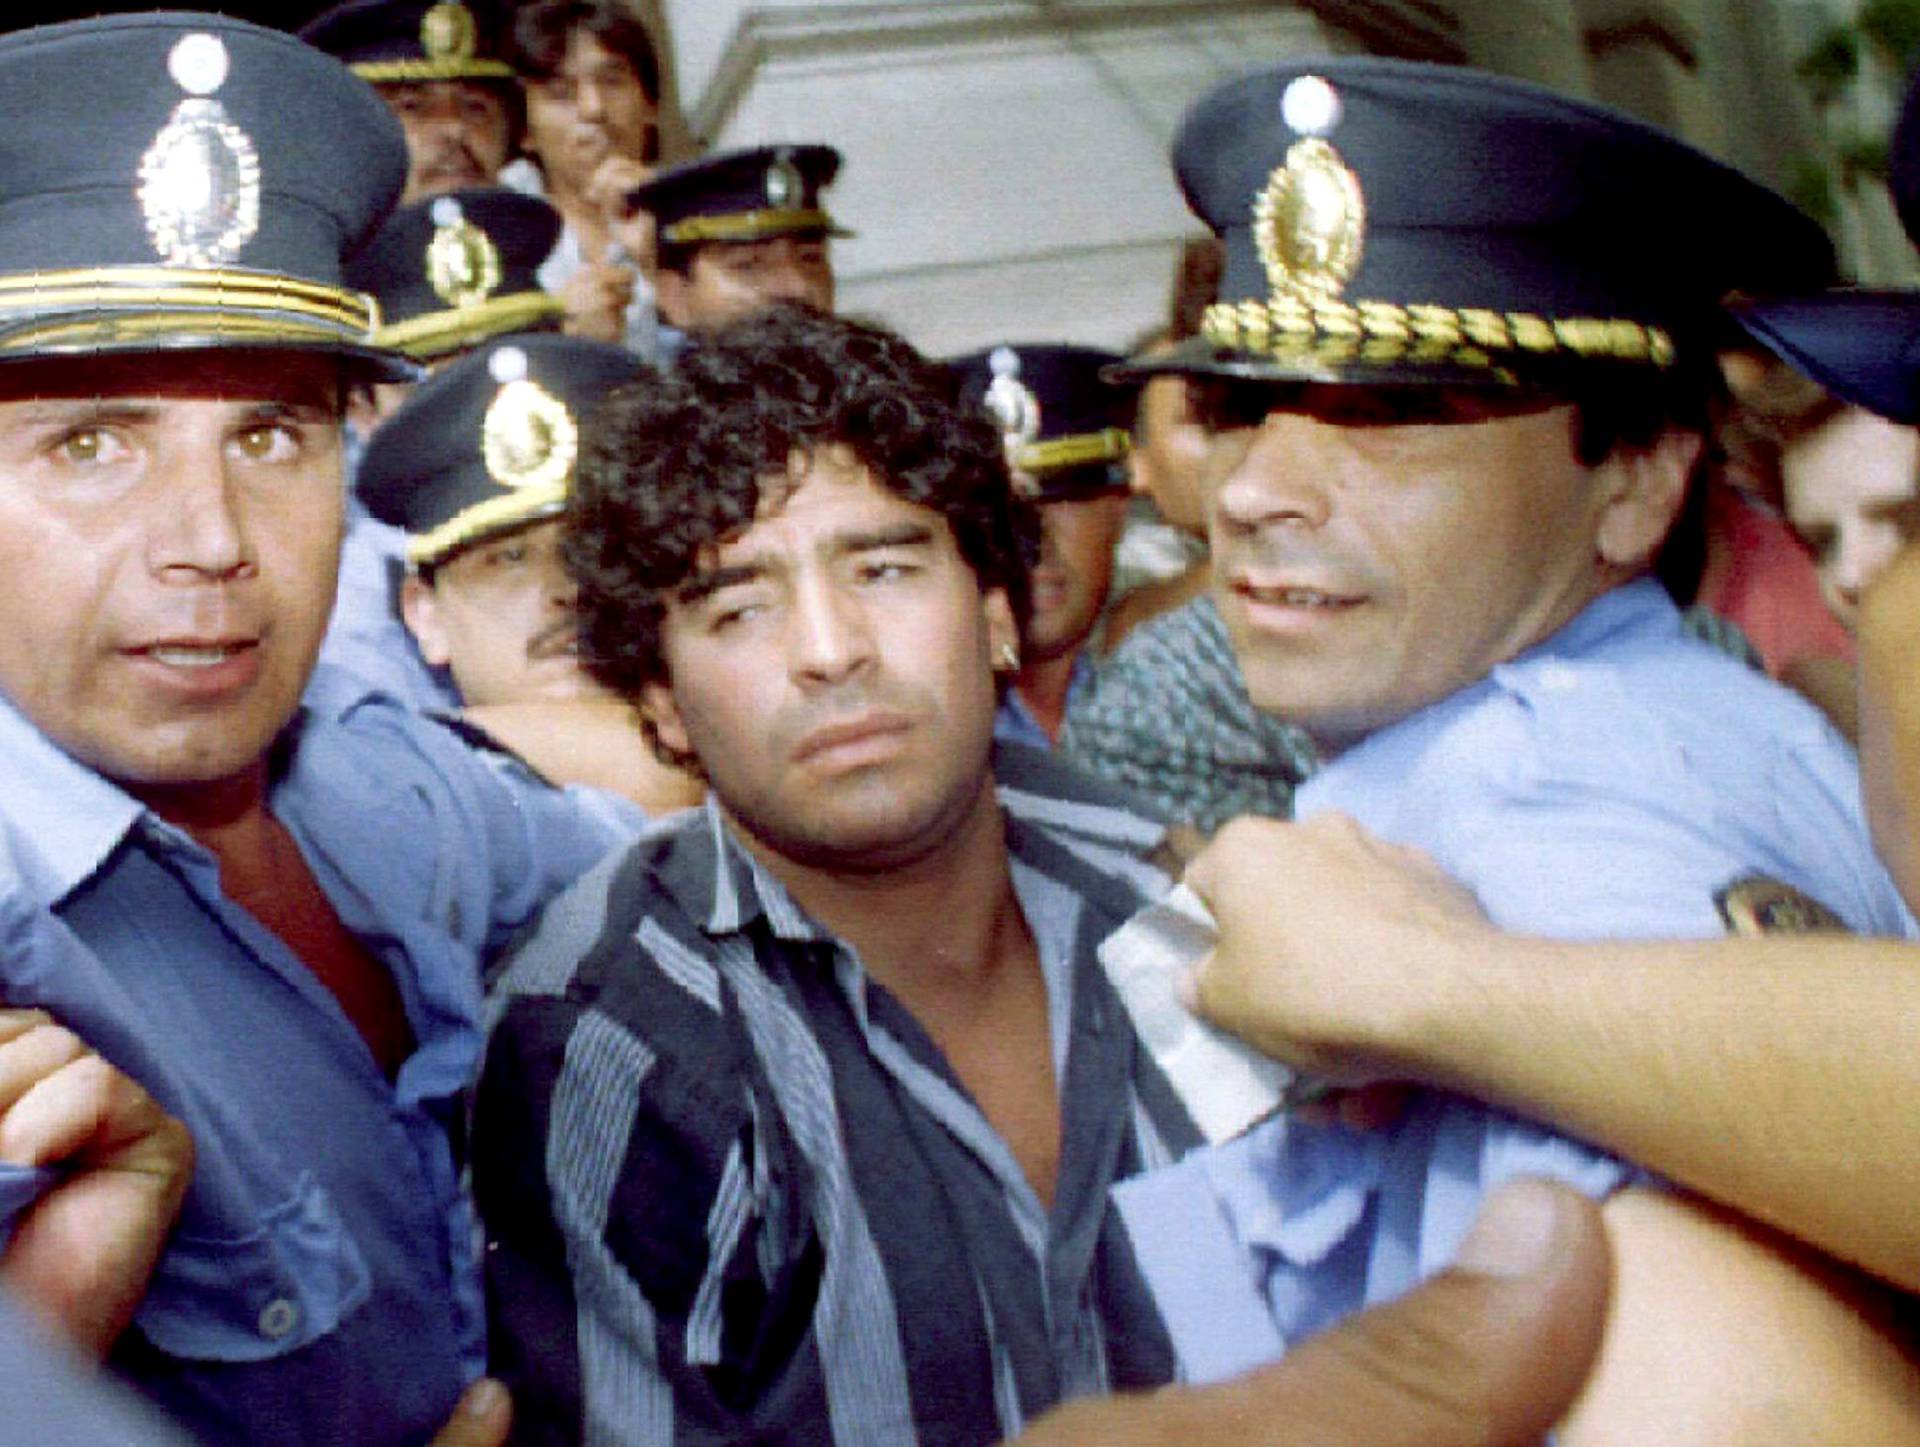 FILE PHOTO: A file photo shows Argentine soccer legend Diego Maradona